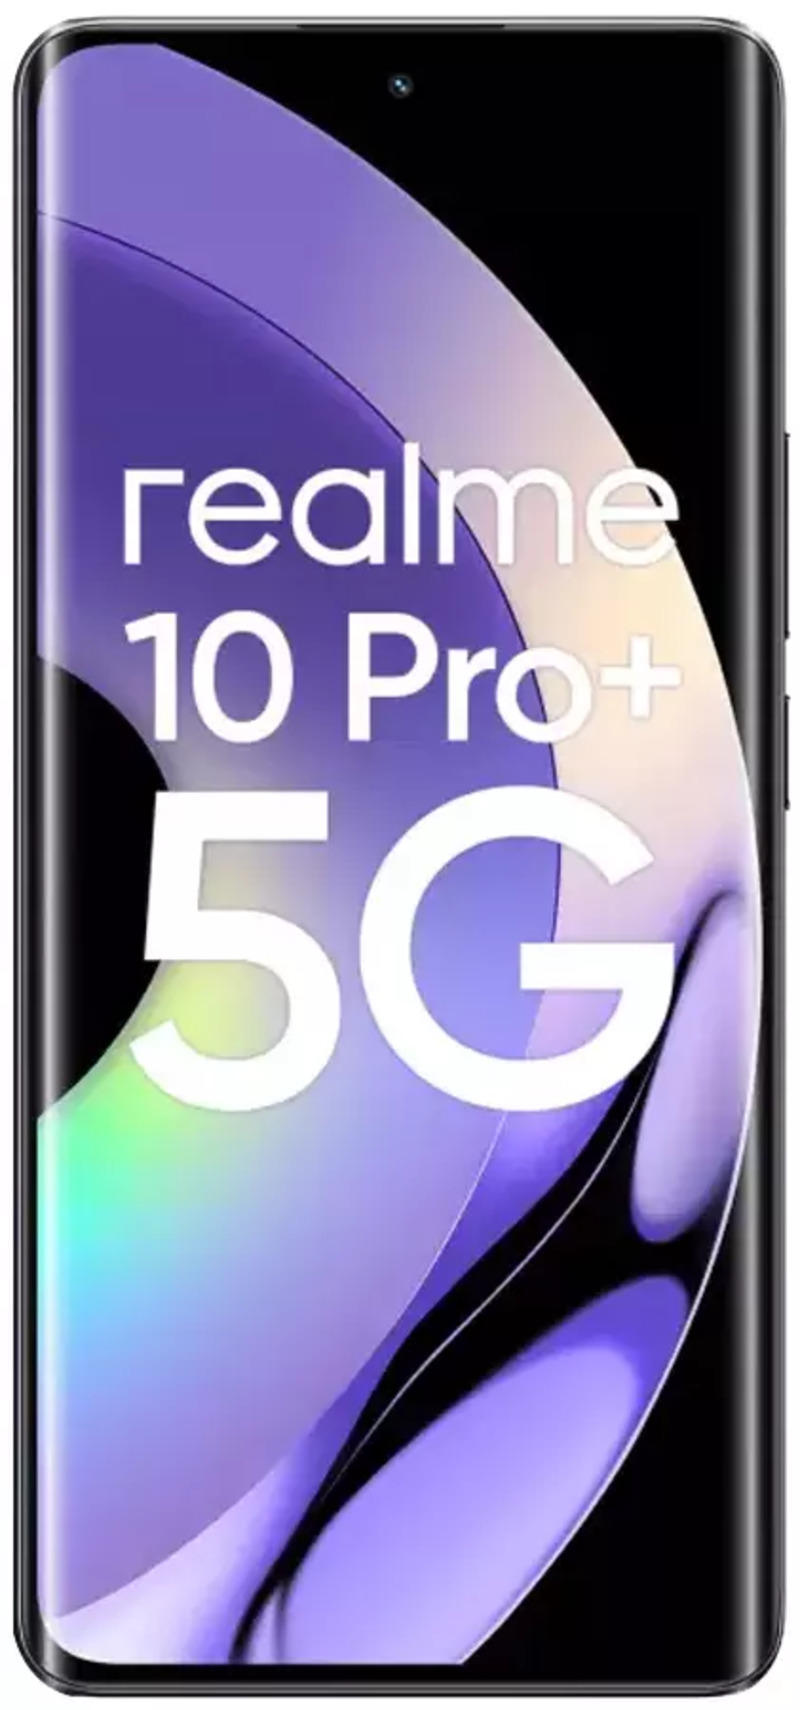 RealMe 10 Pro Plus 5G (128 GB Storage, 108 MP Camera) Price and